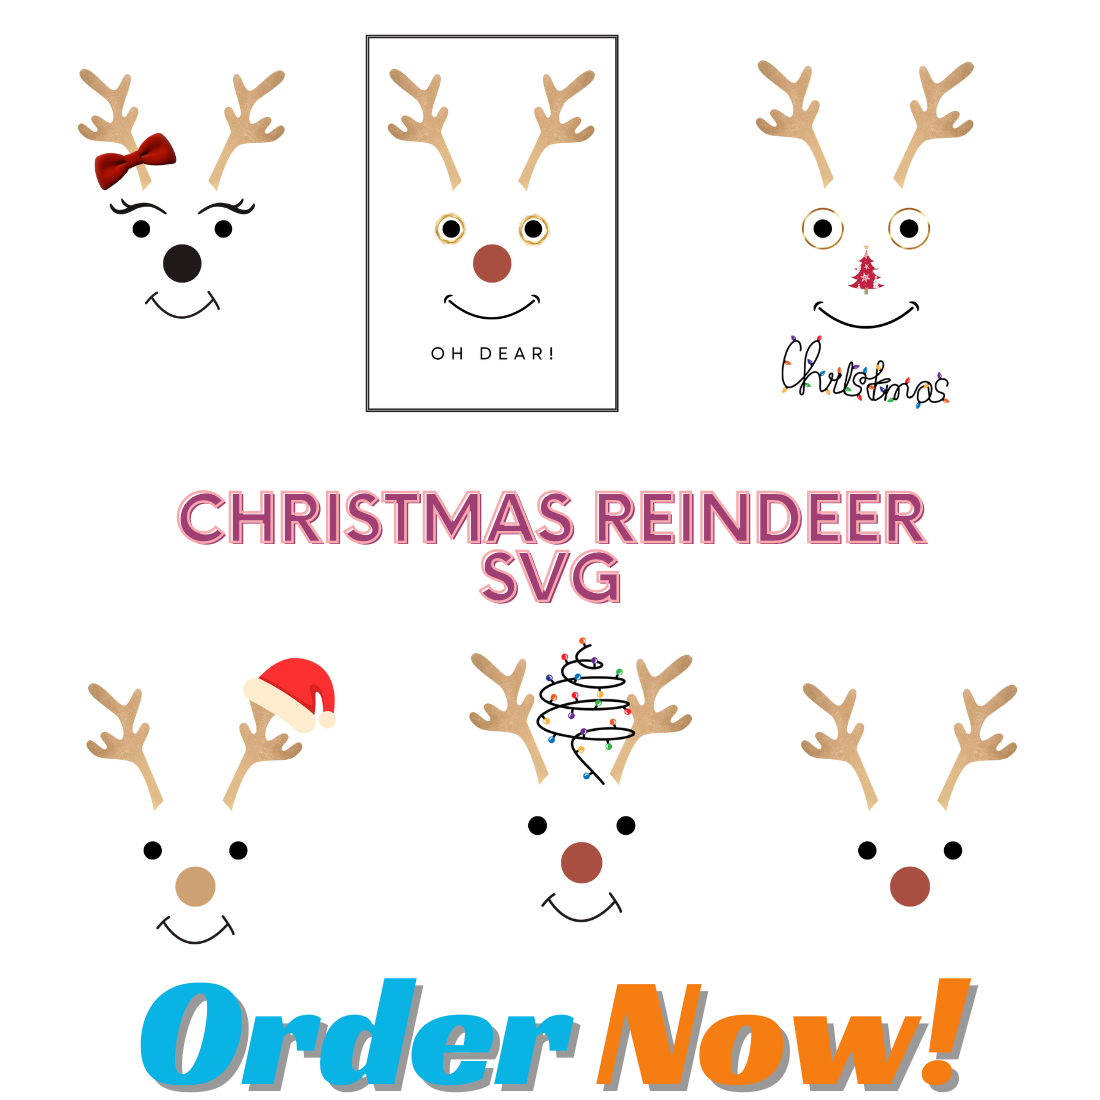 Reindeer SVG, Reindeer Face Svg, Christmas Reindeer Svg, Rudolph reindeer svg, Xmas reindeer svg, Santa reindeer, DXF Cricut cut file vector cover image.